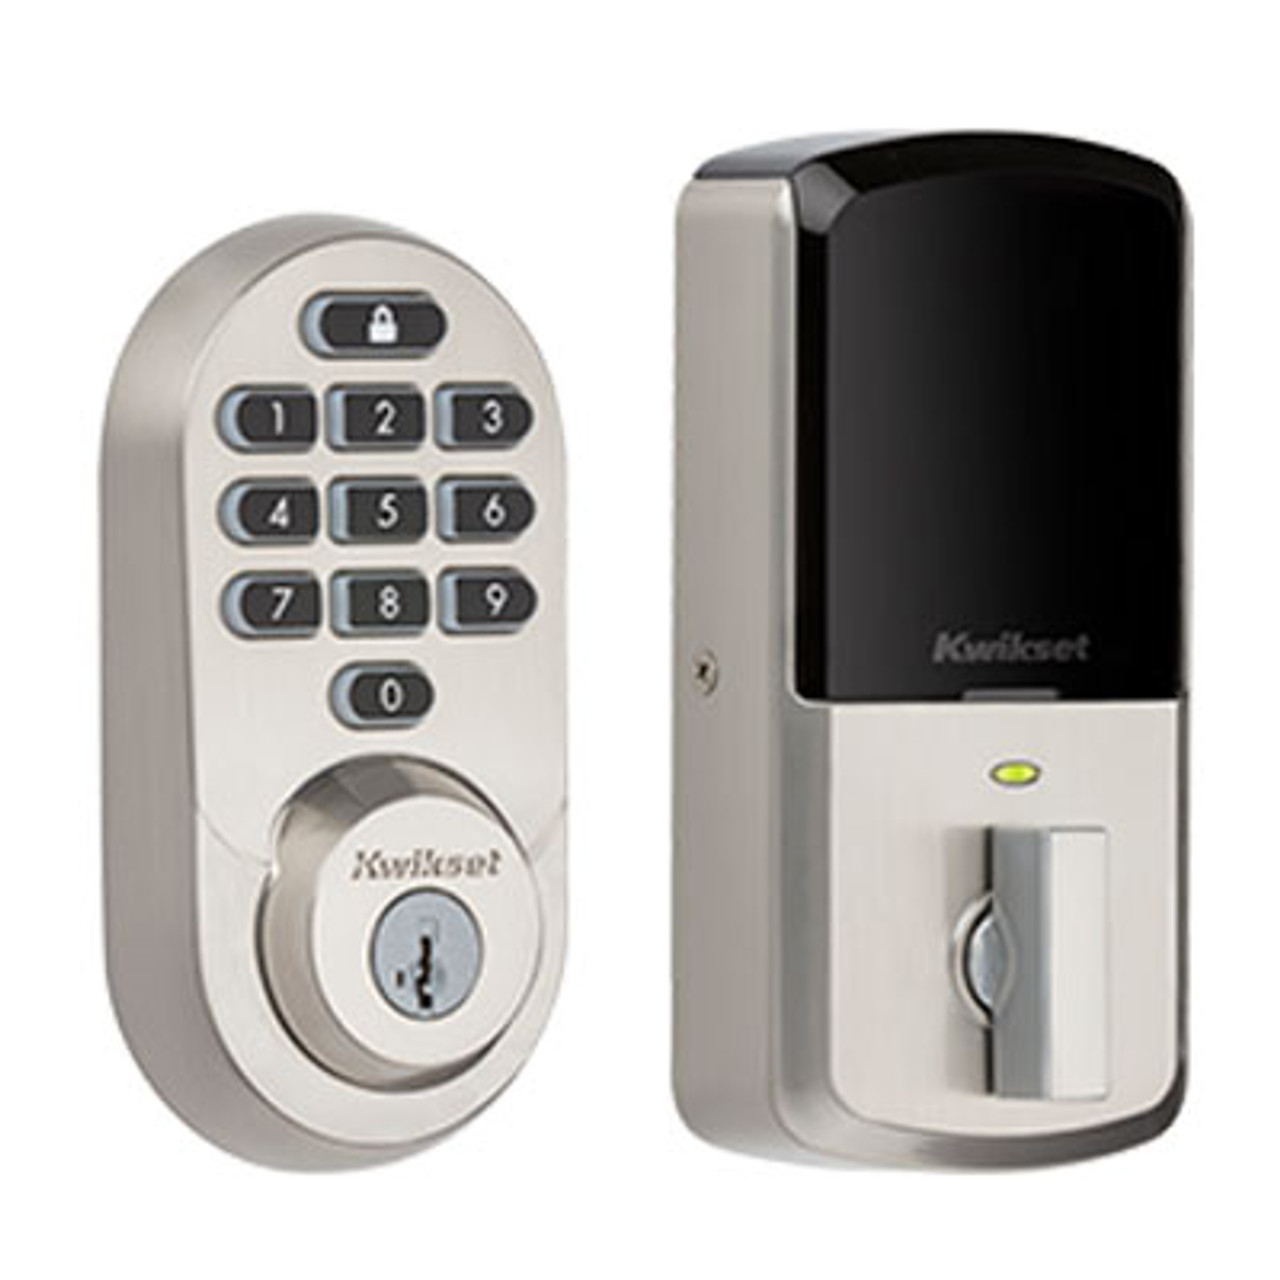 Kwikset 938 halo keyless WiFi entry lock for Airbnb